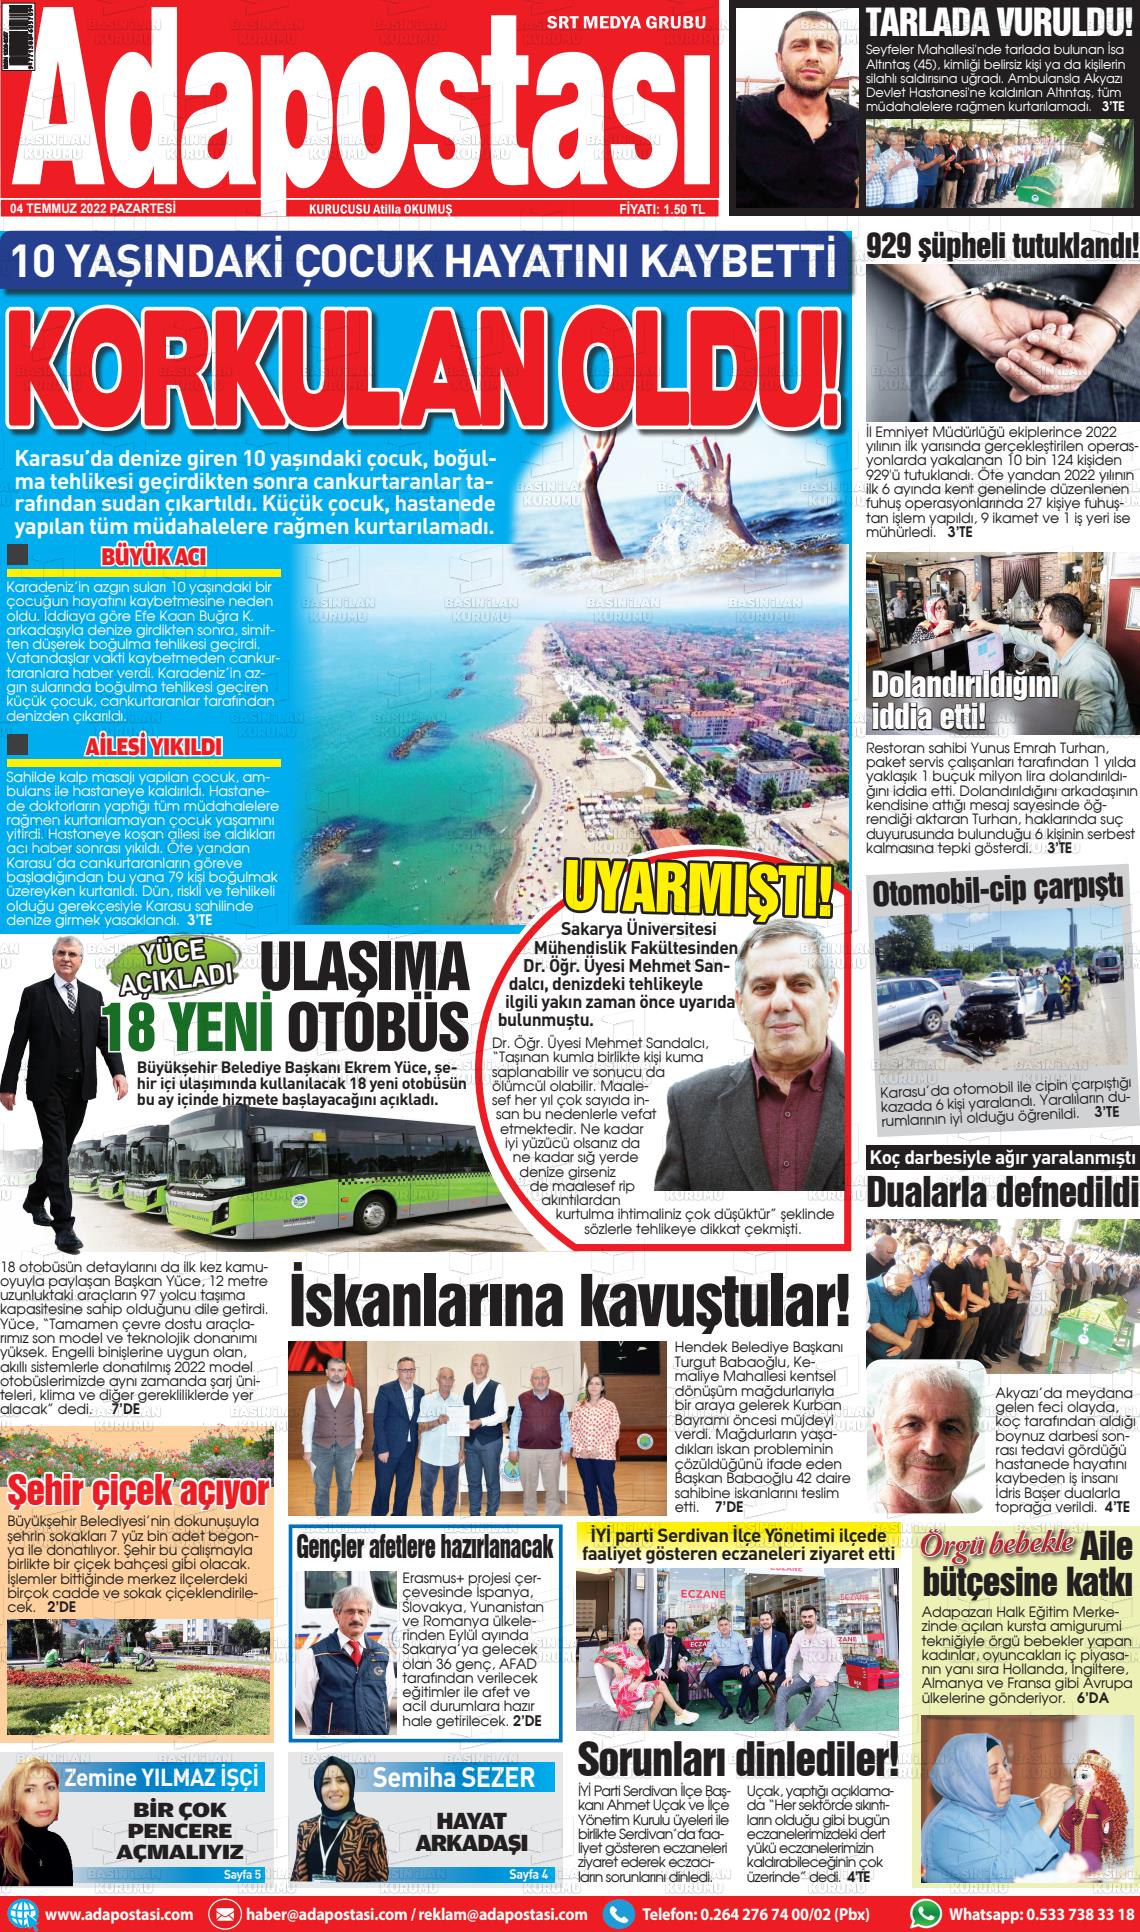 04 Temmuz 2022 Ada Postası Gazete Manşeti